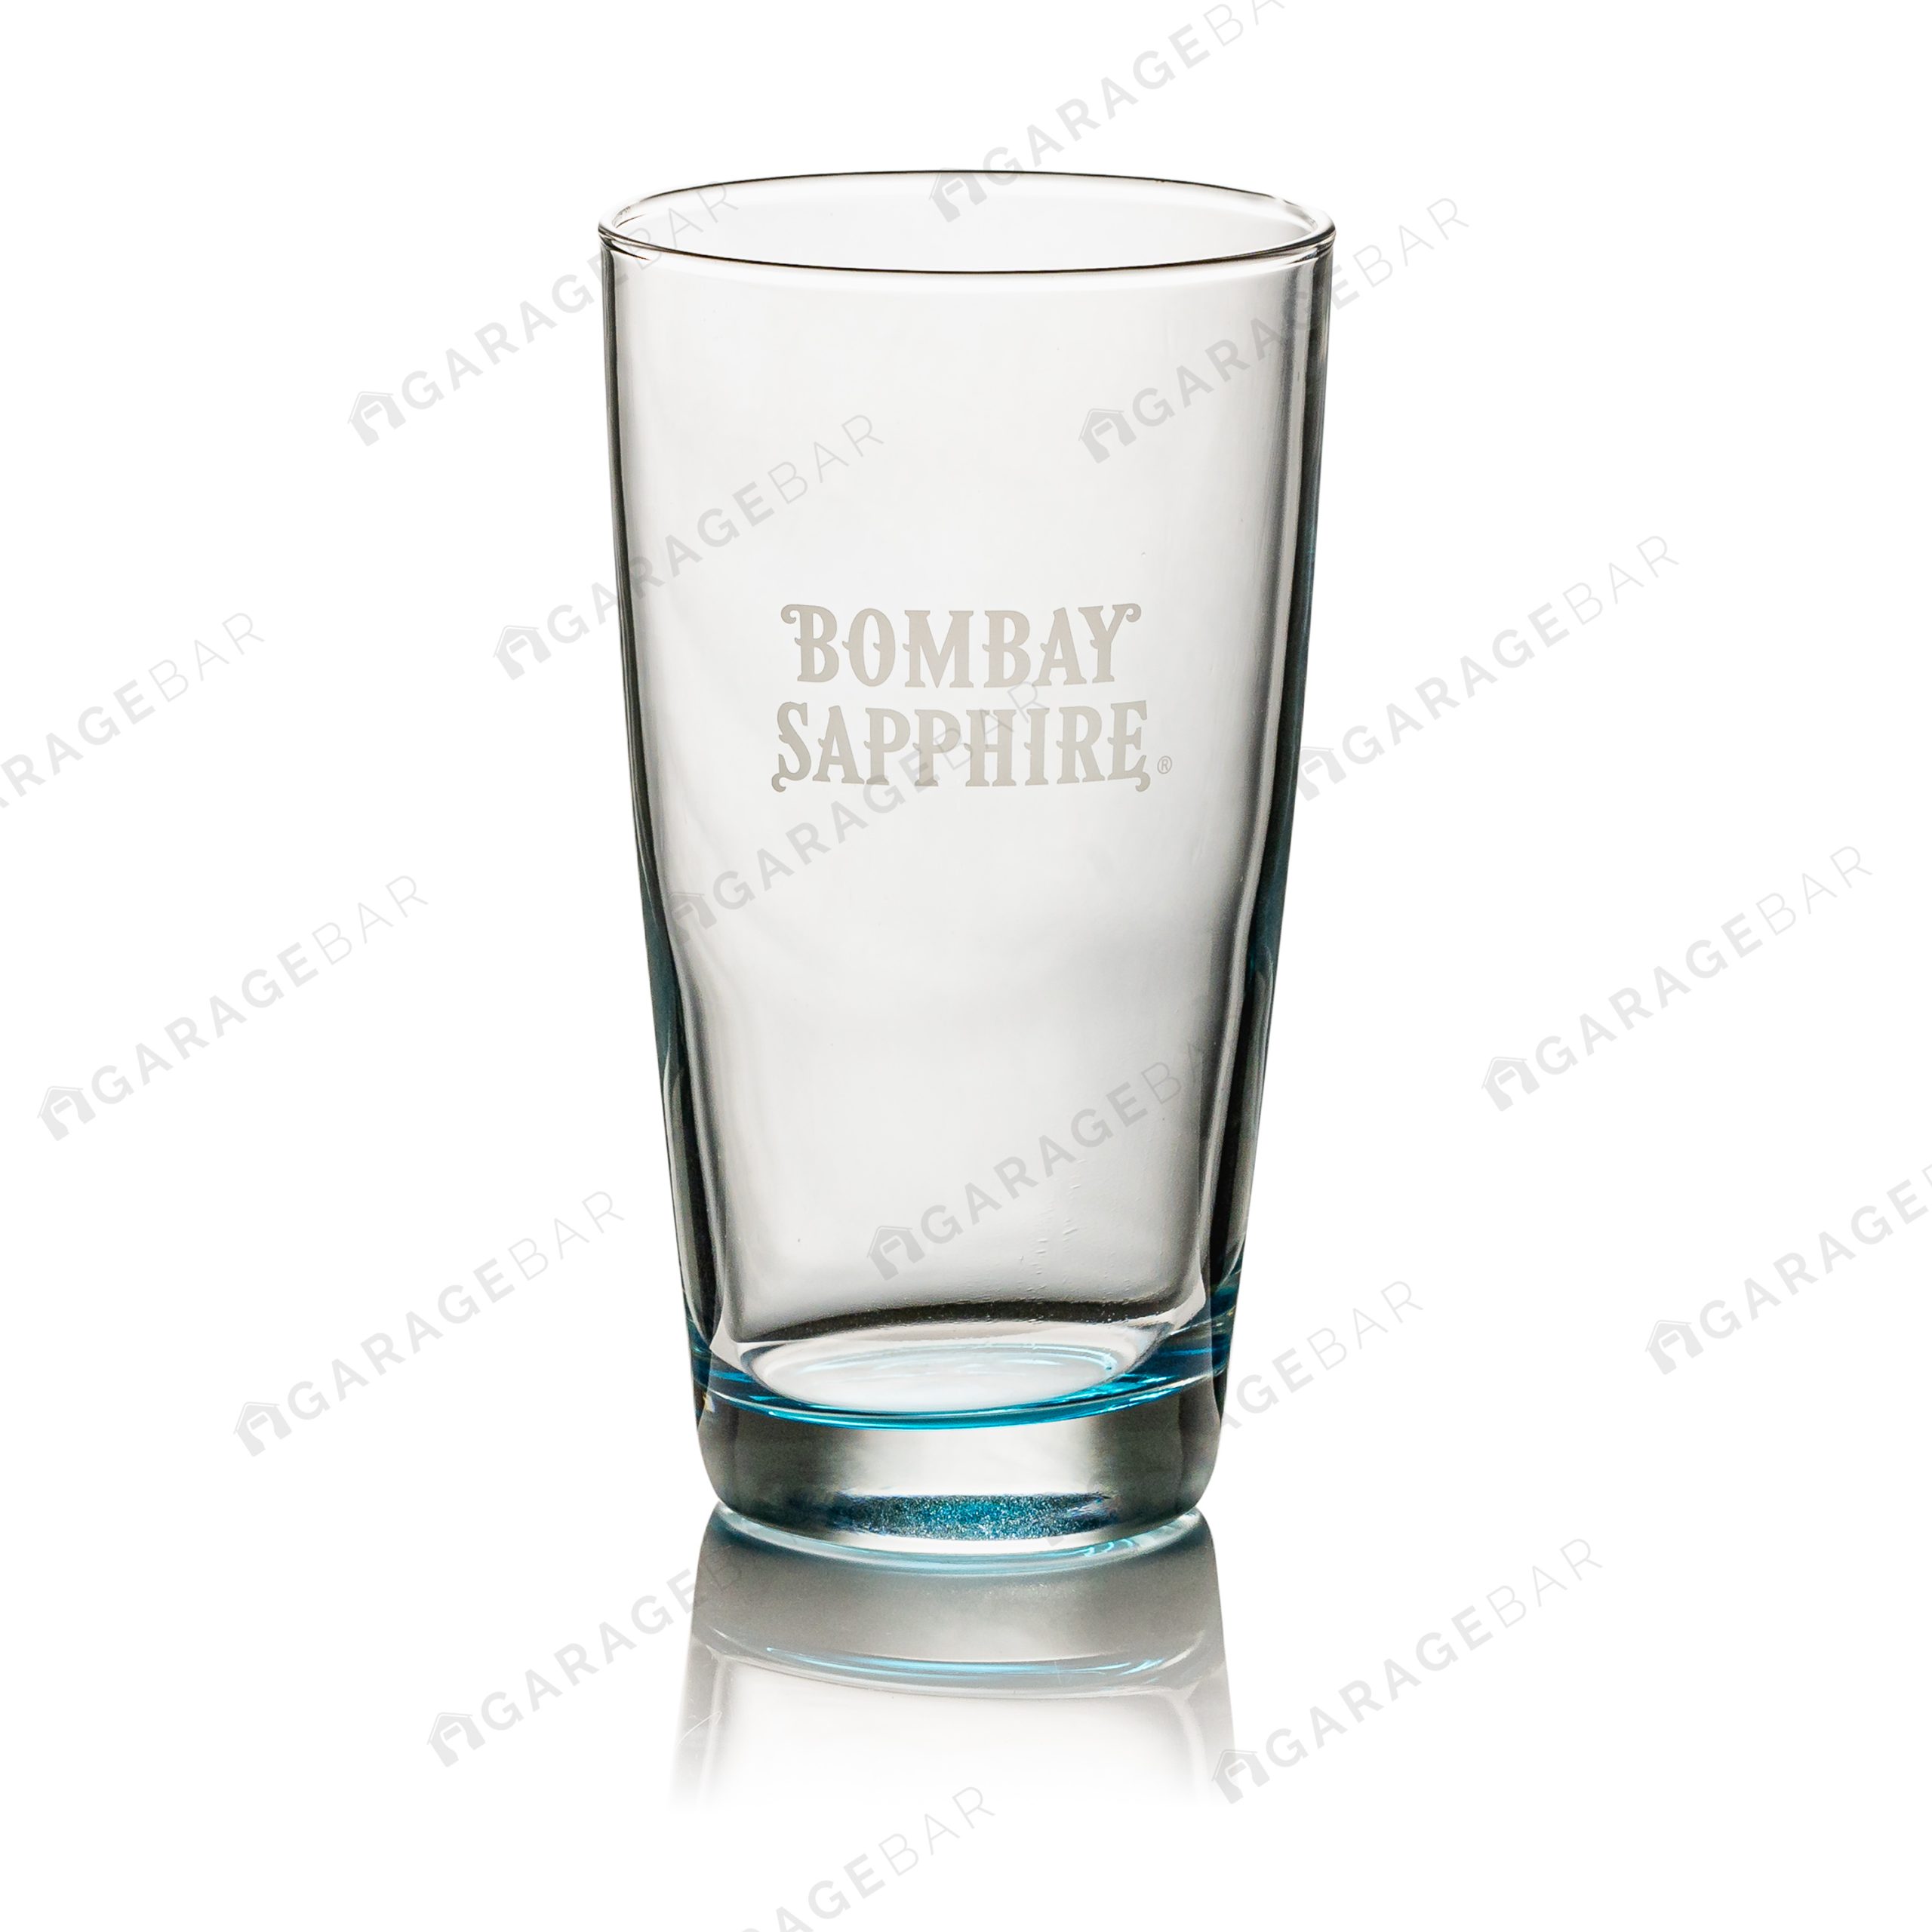 Bombay Sapphire Tumbler Glass